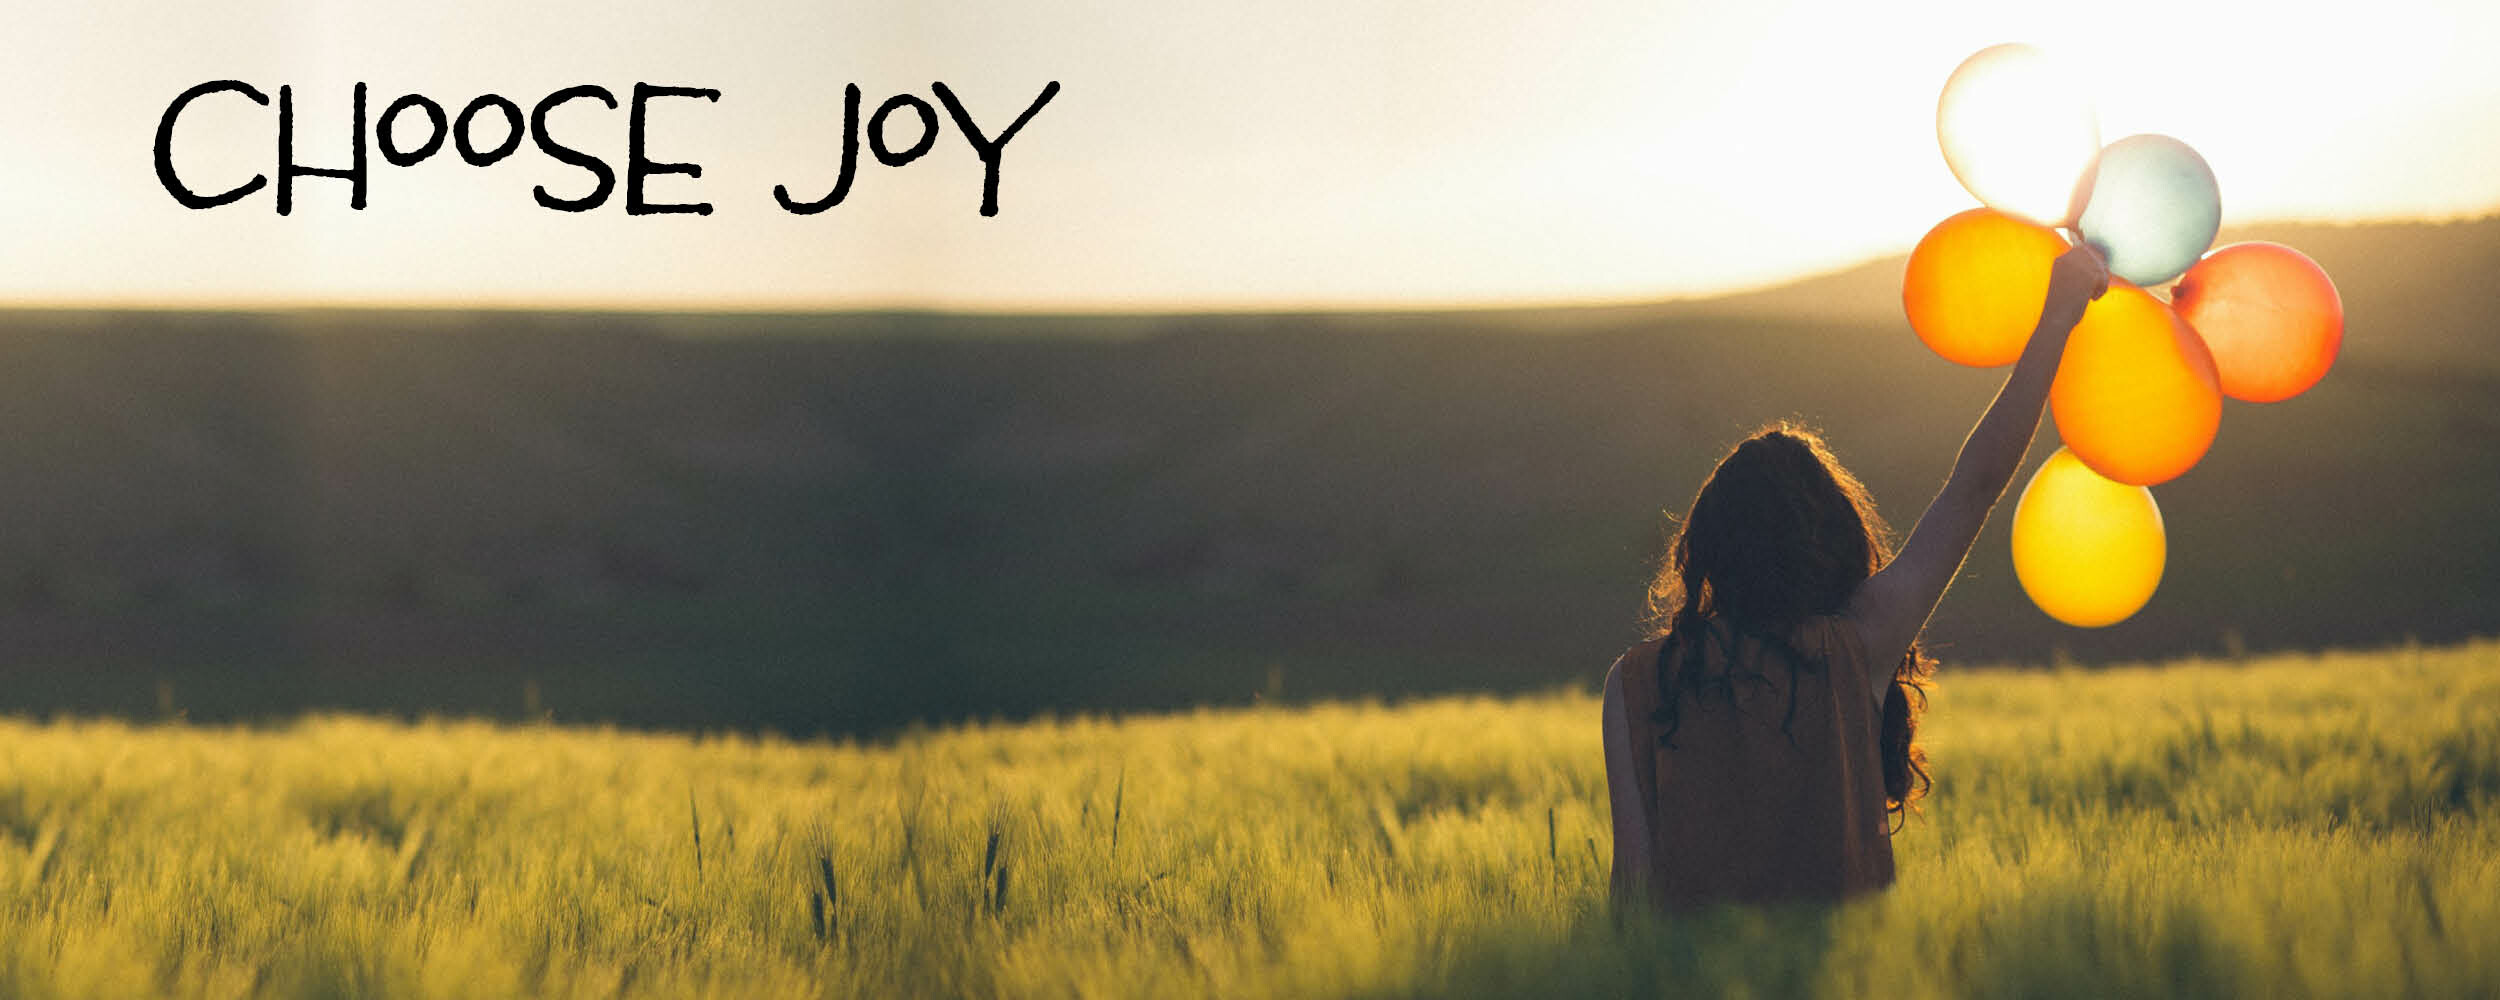 Choose Joy, Children's Message